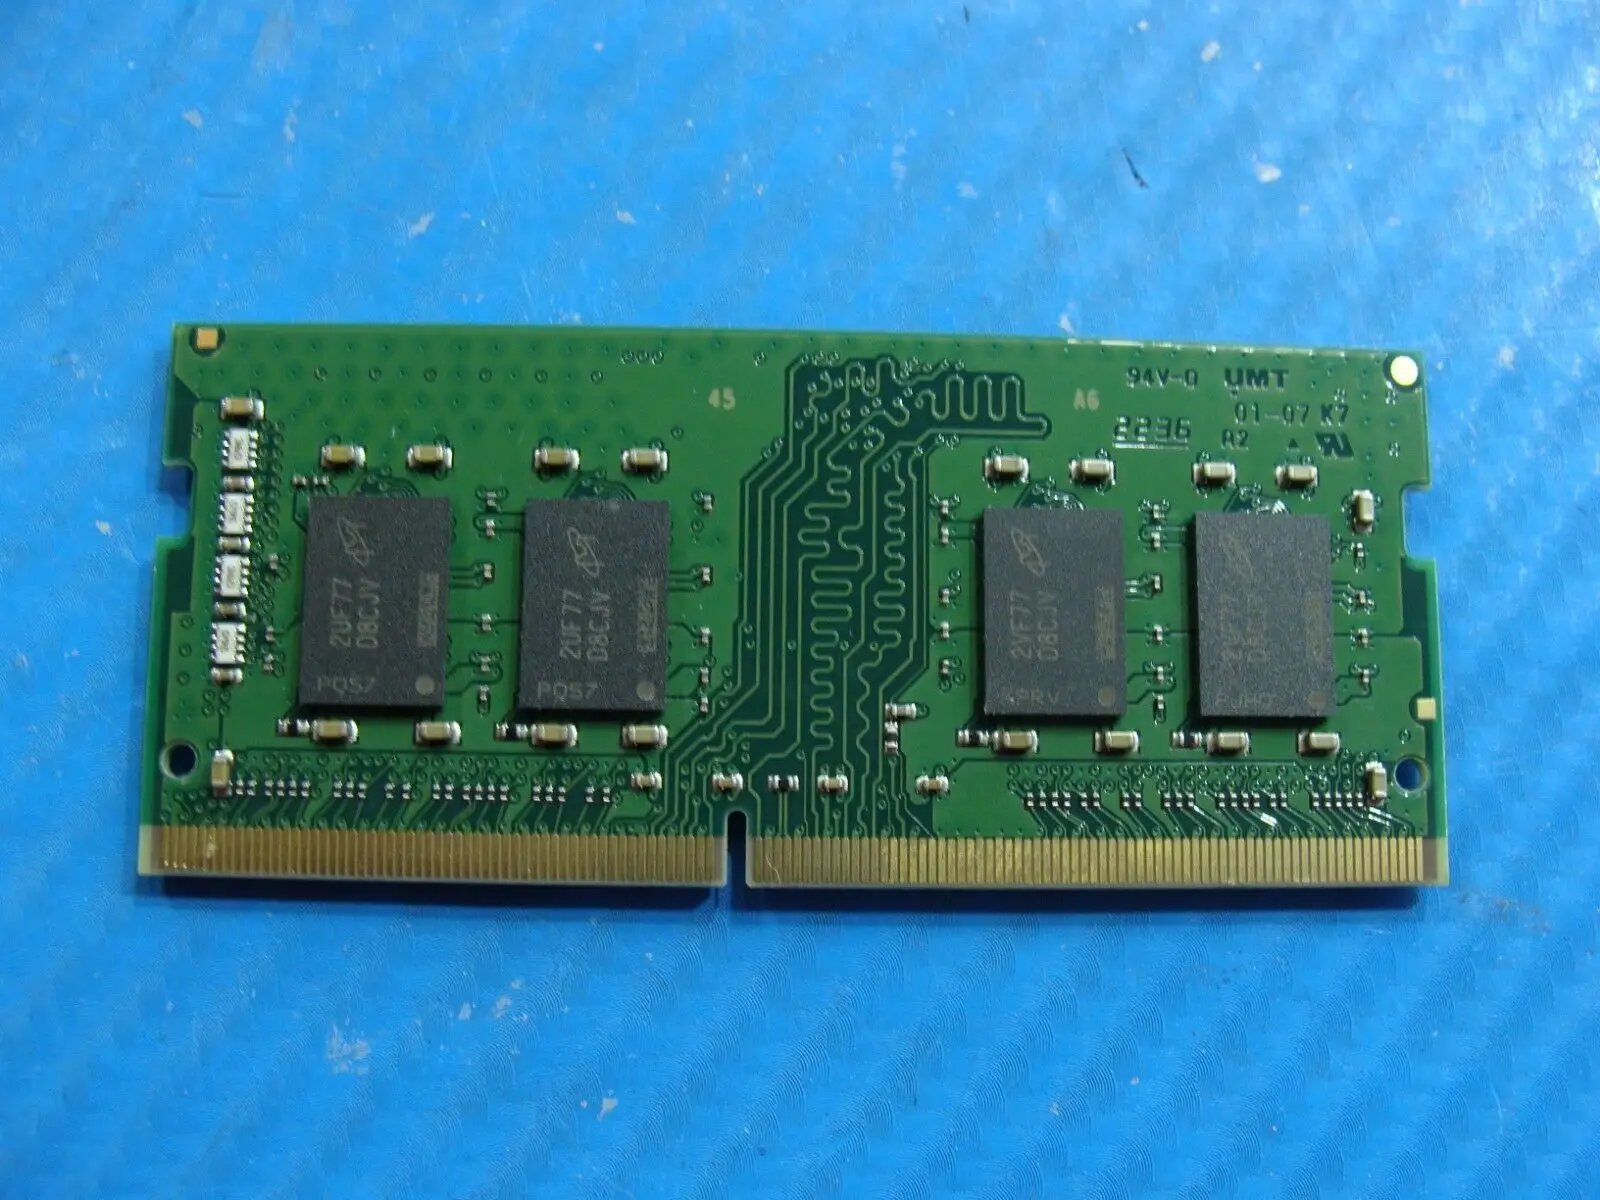 Dell 7400 So-Dimm Kingston 16GB Memory RAM PC4-3200AA K1CXP8-MIF